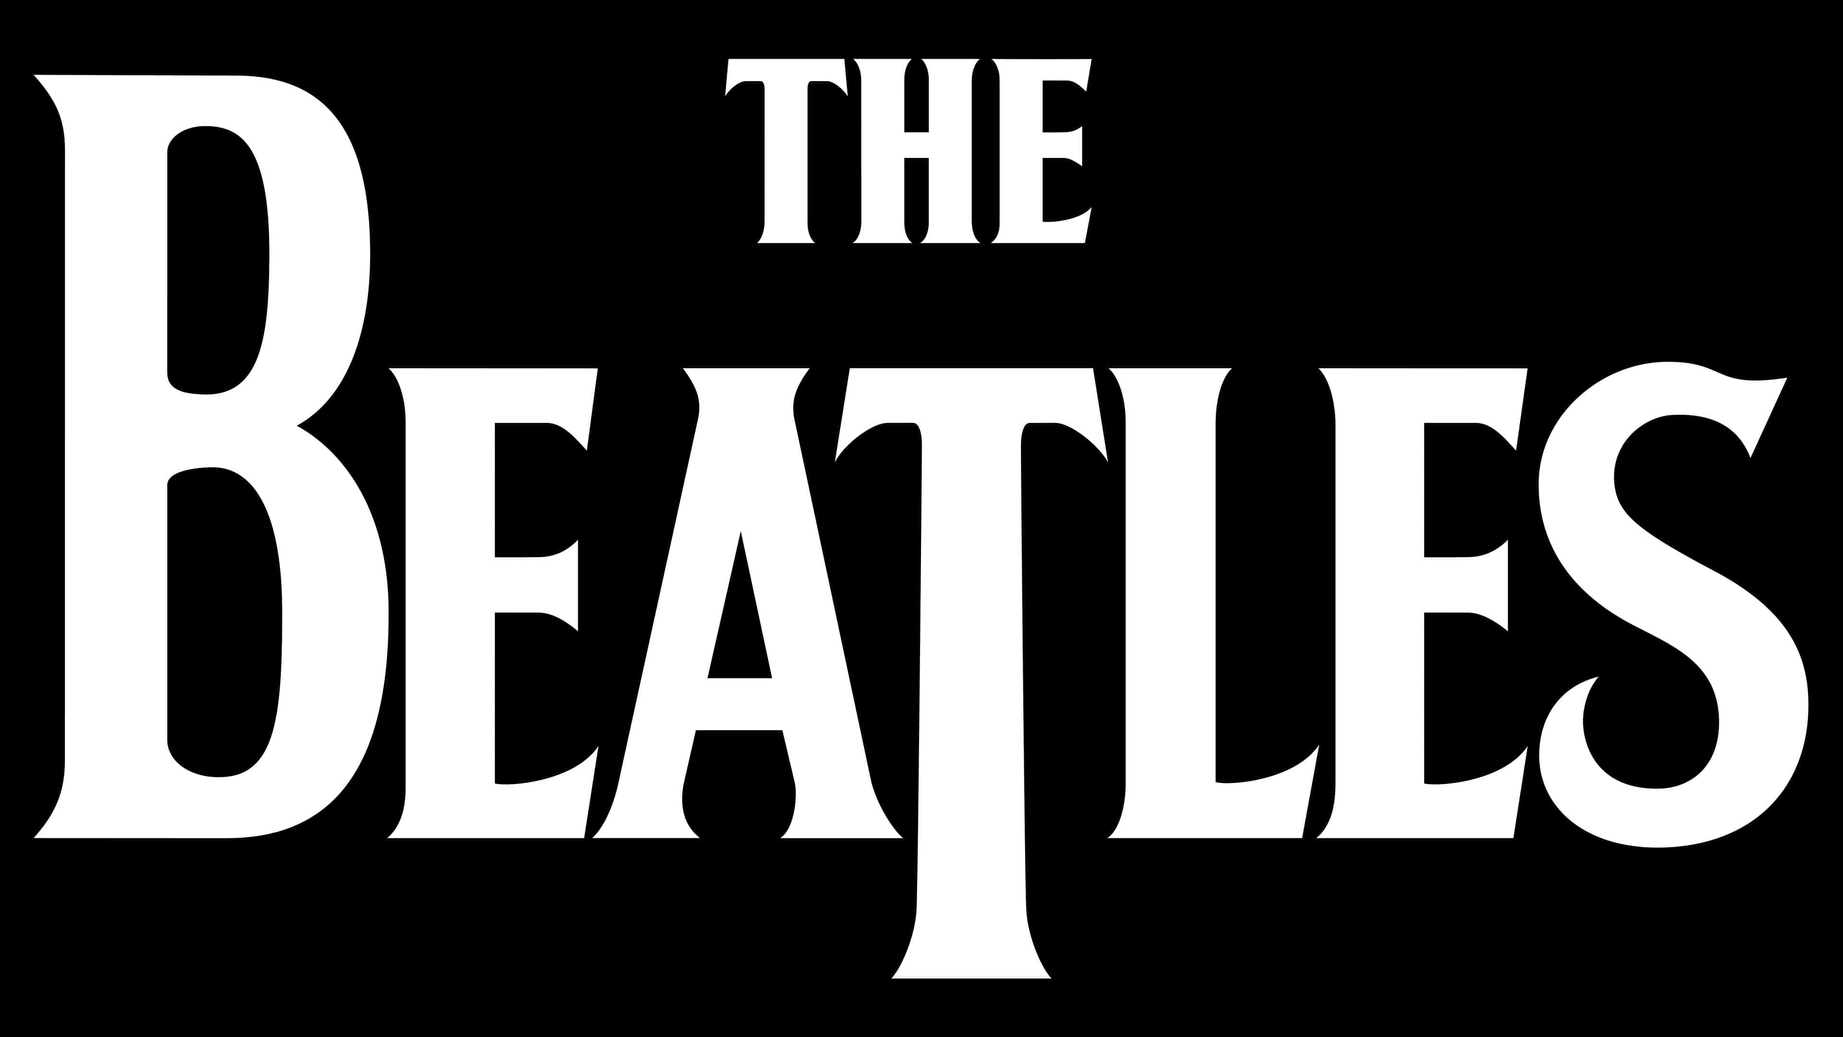 Beatles symbol